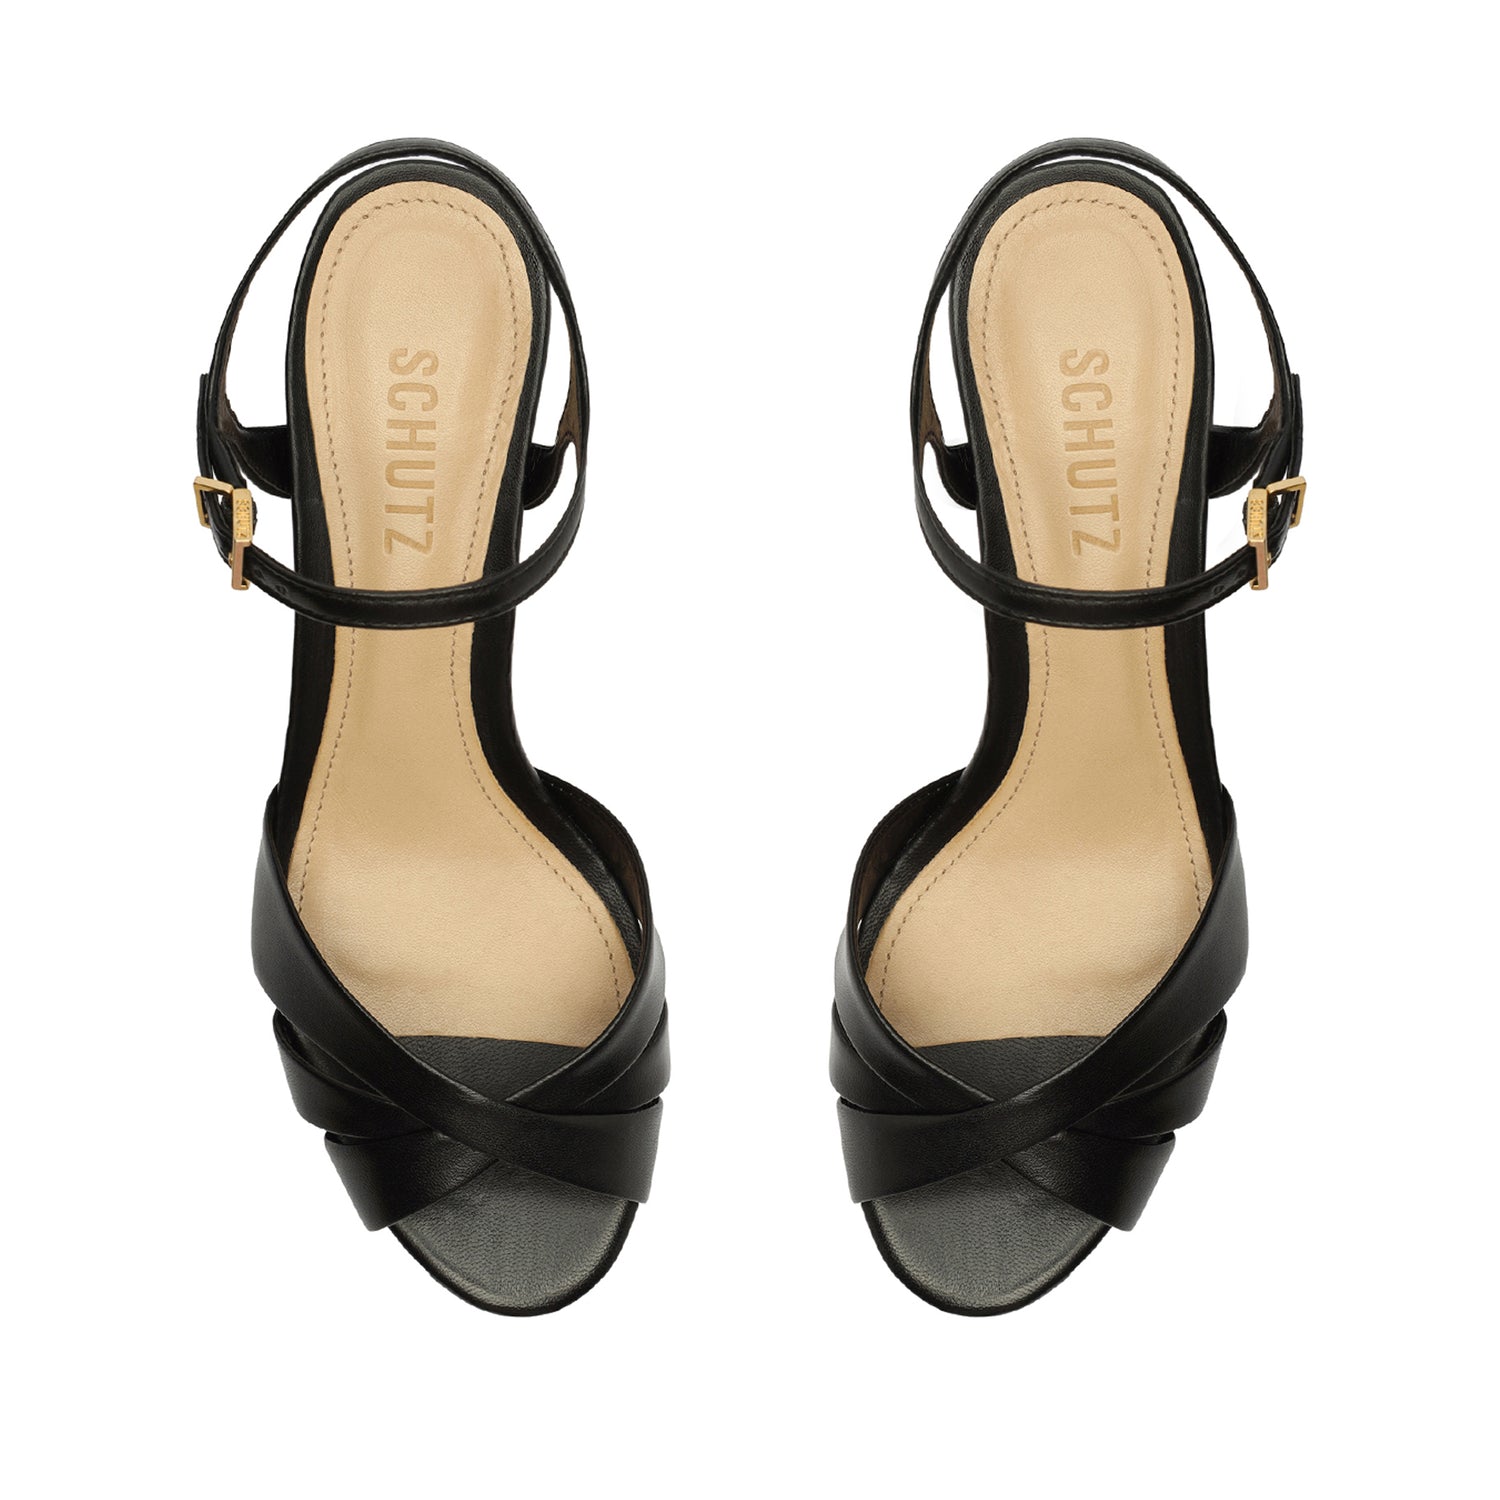 Keefa Nappa Leather Sandal Sandals OPEN STOCK    - Schutz Shoes